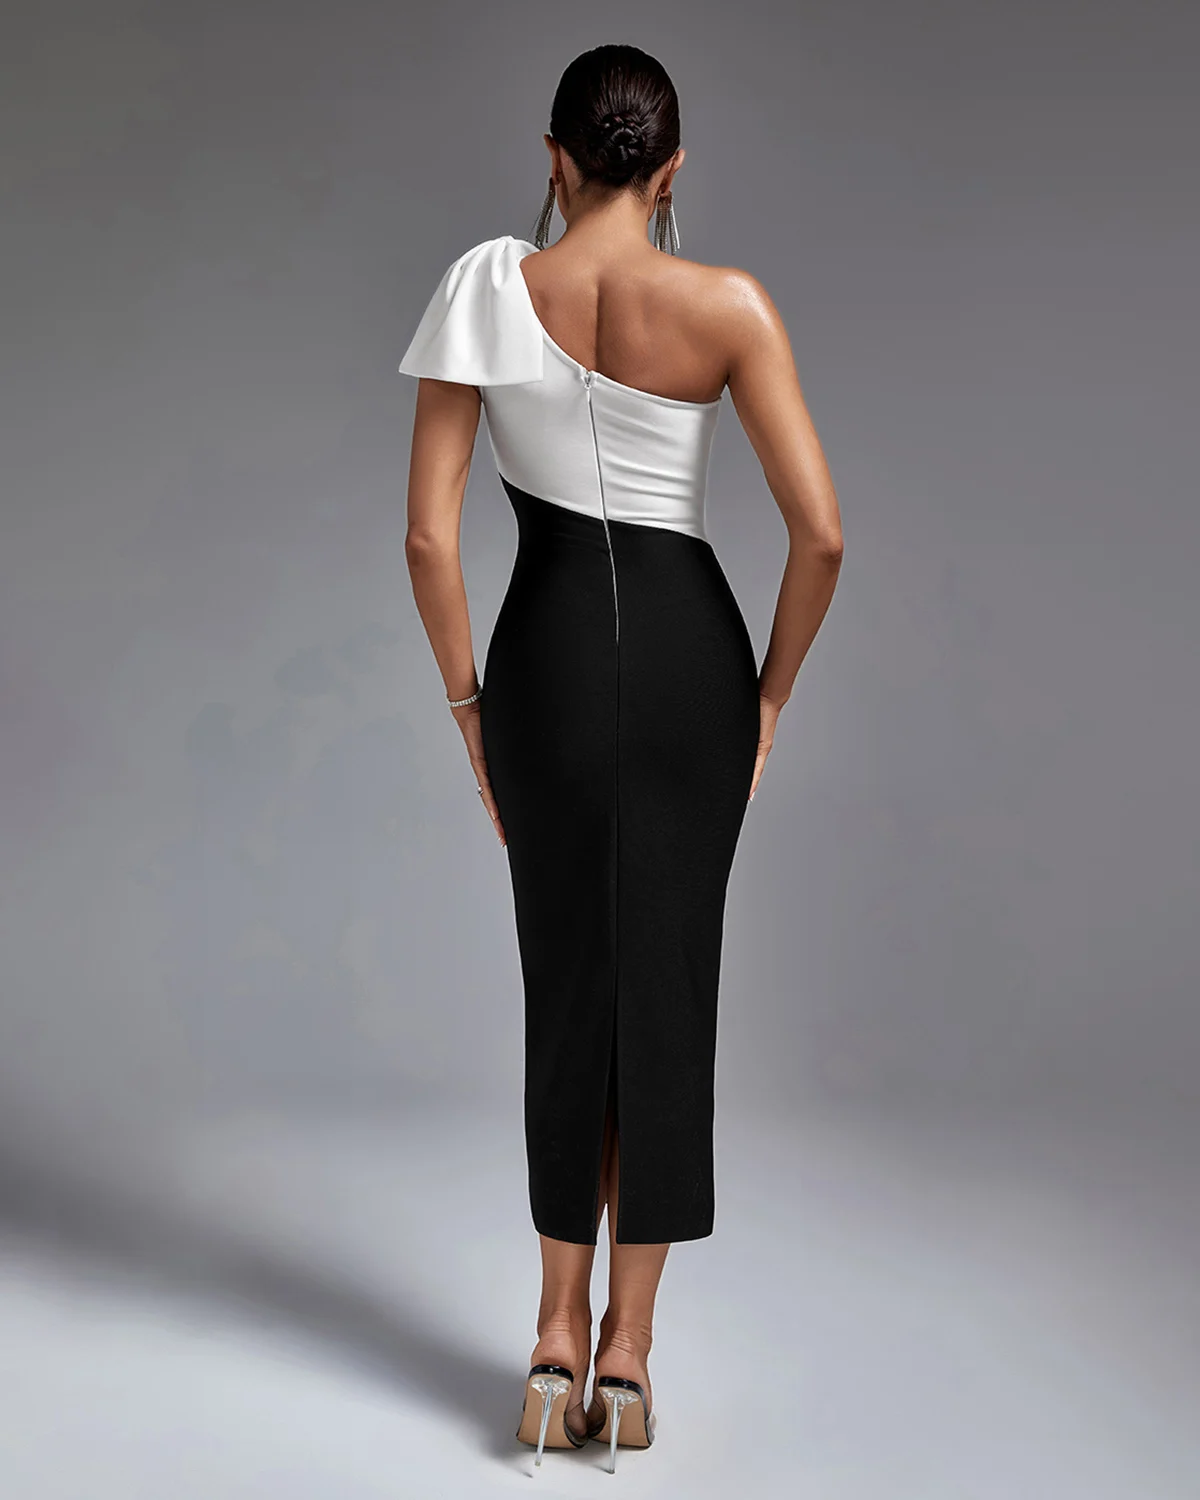 Ocstrade Verano Casual Dress Black And White Bandage Dress One Bow